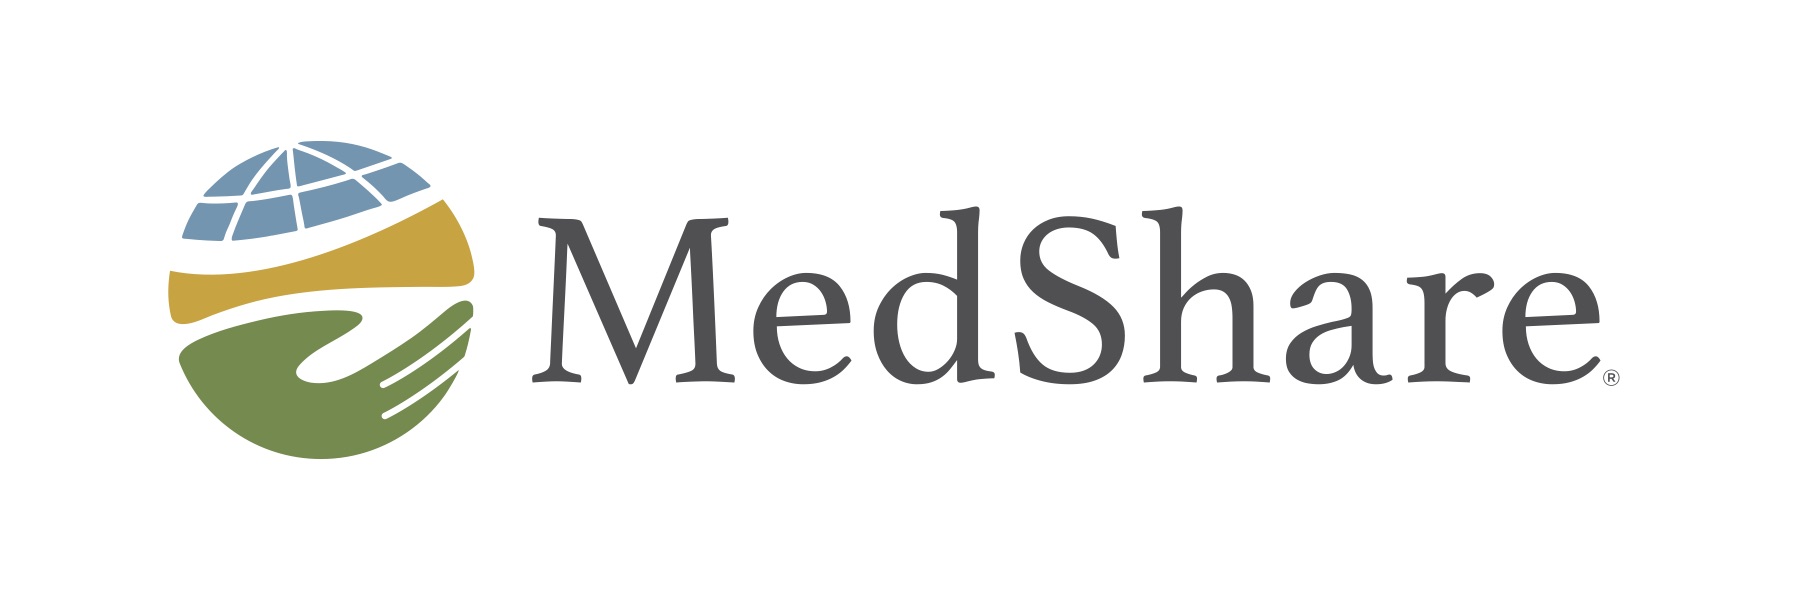 Med share logo